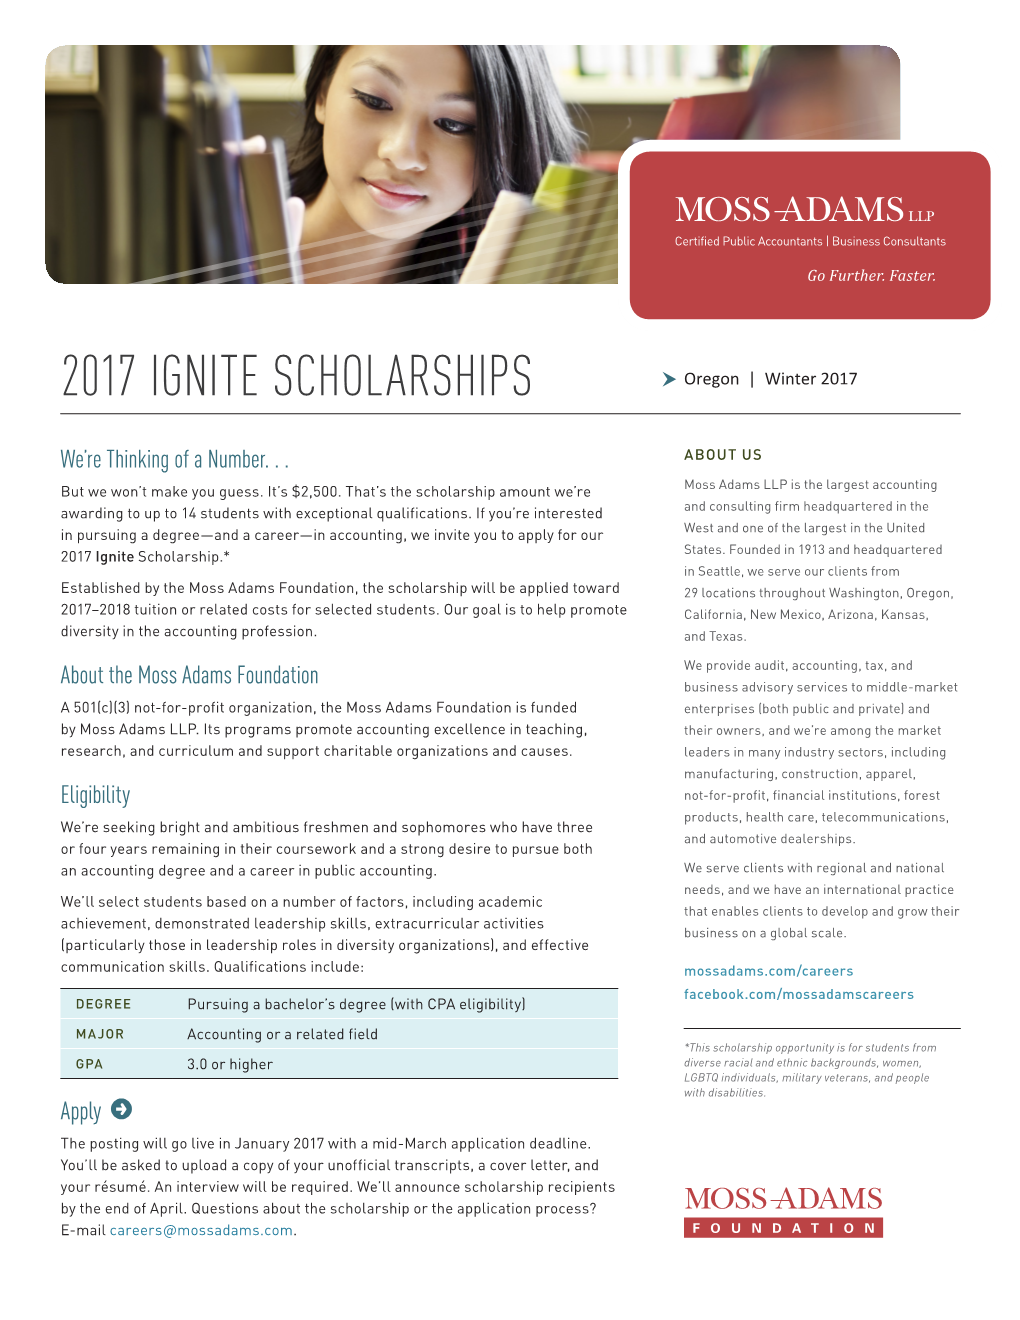 Moss Adams HRX160801 Ignite Scholarships Flyer